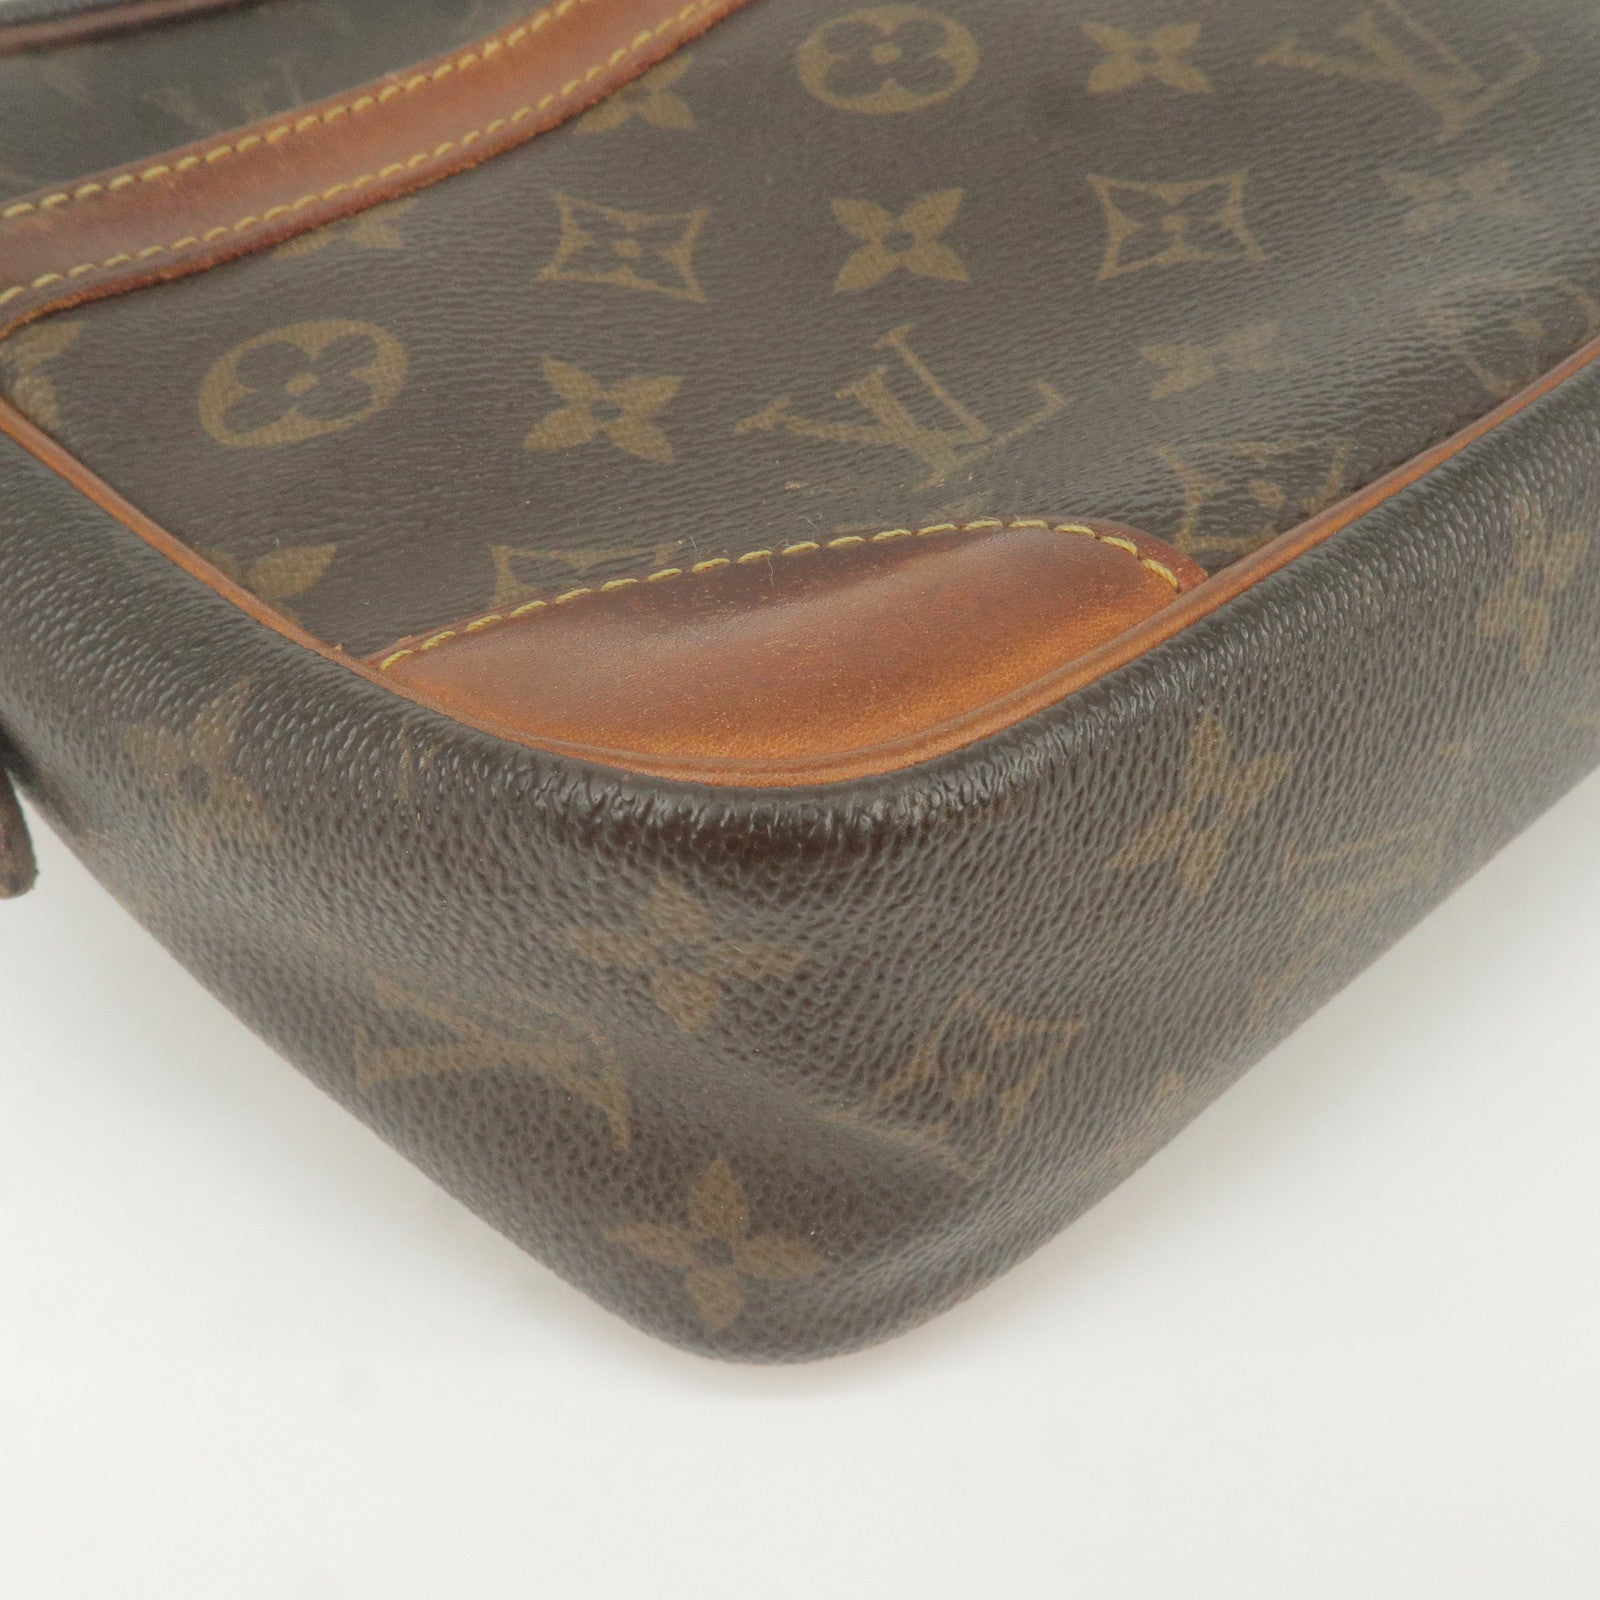 Louis Vuitton 2016 Pre-Owned Monogram Eclipse Belt Bag - Black for